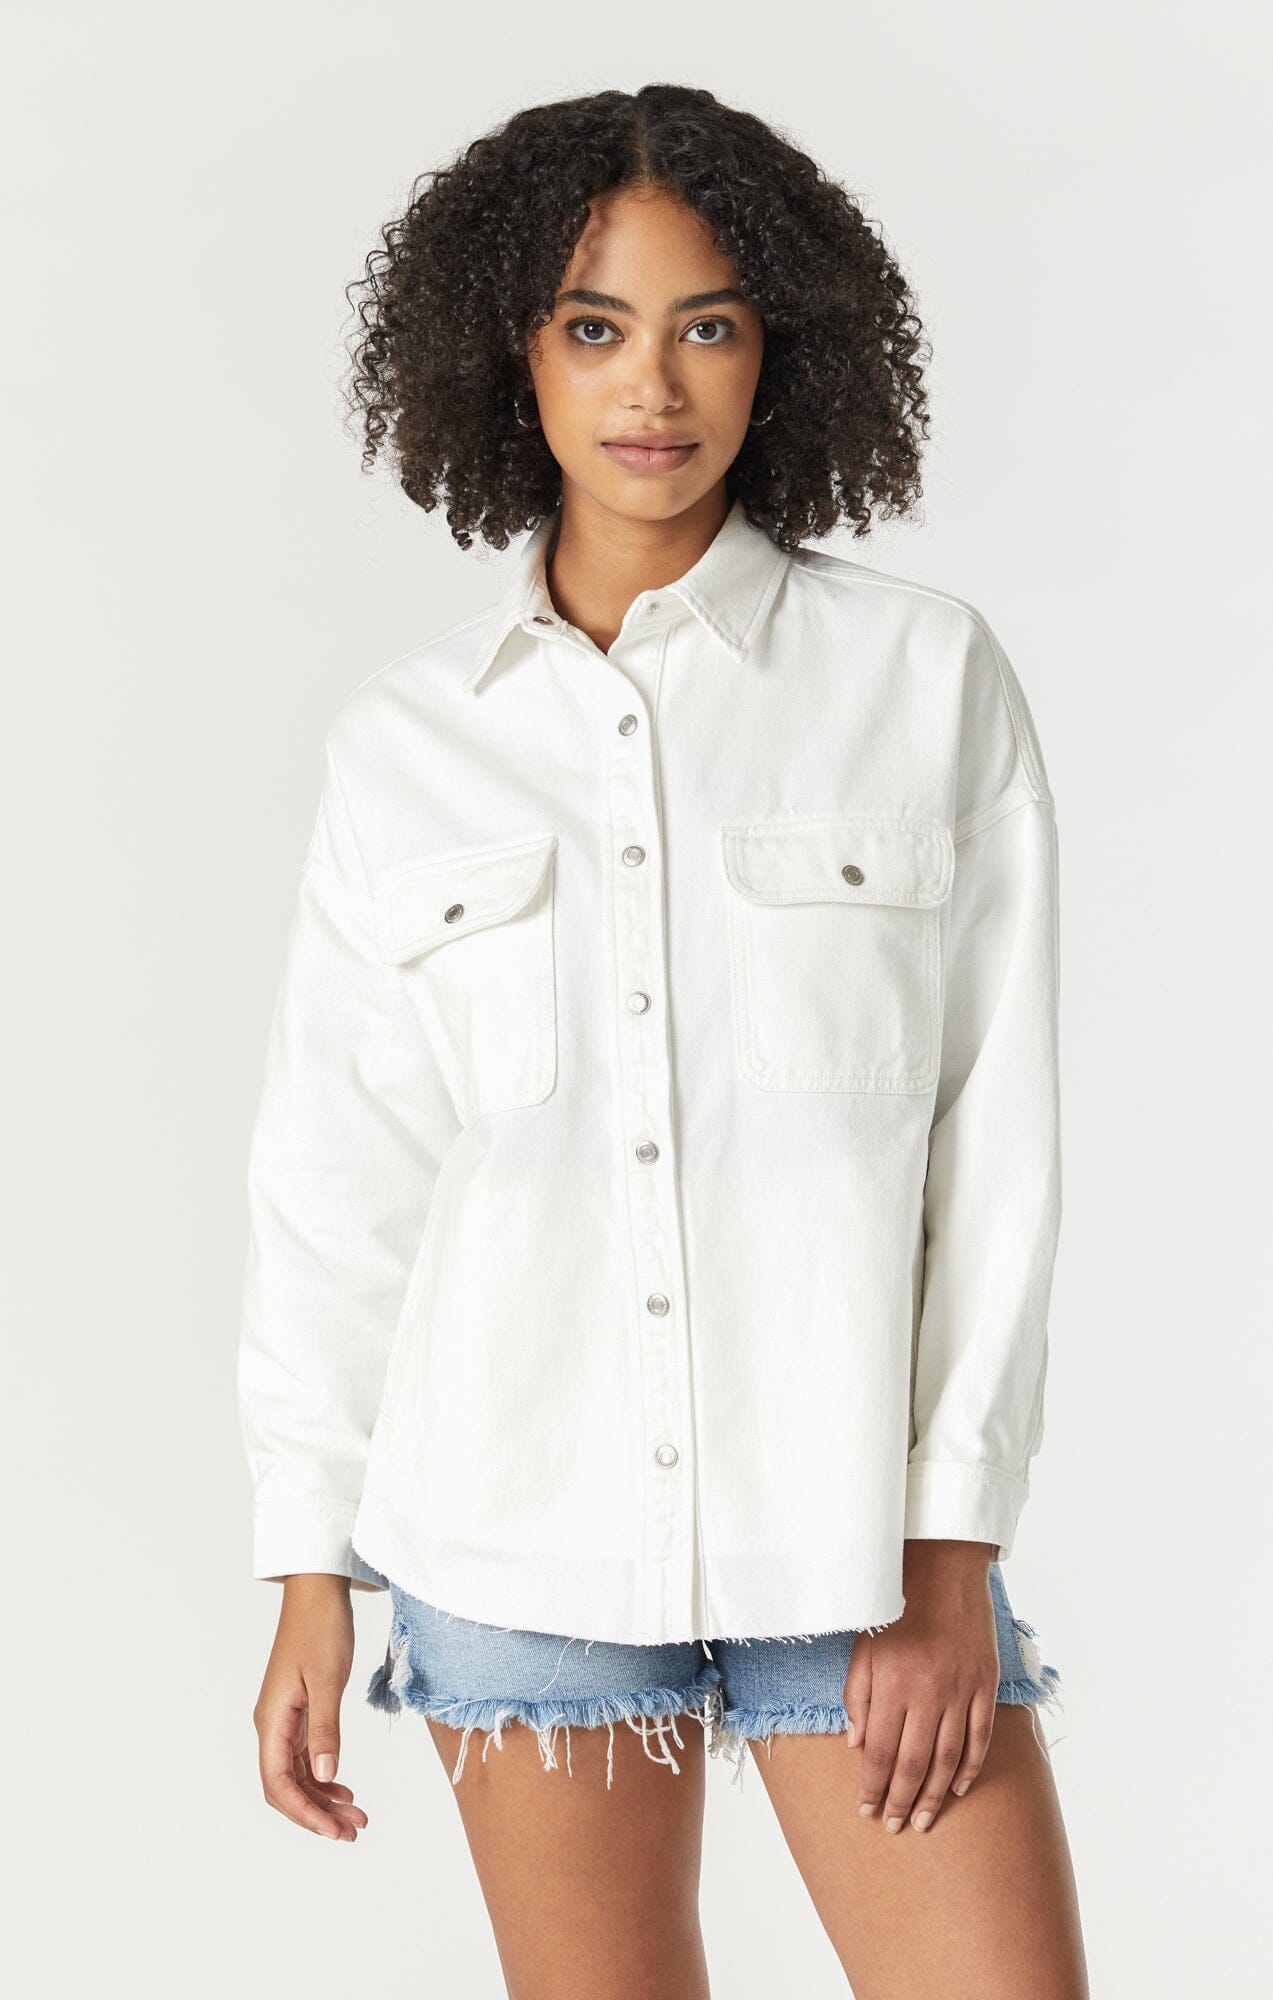 Wrangler Women's Retro Long Sleeve Western Snap Shirt, Dark Denim, X-Small  at Amazon Women's Clothing store